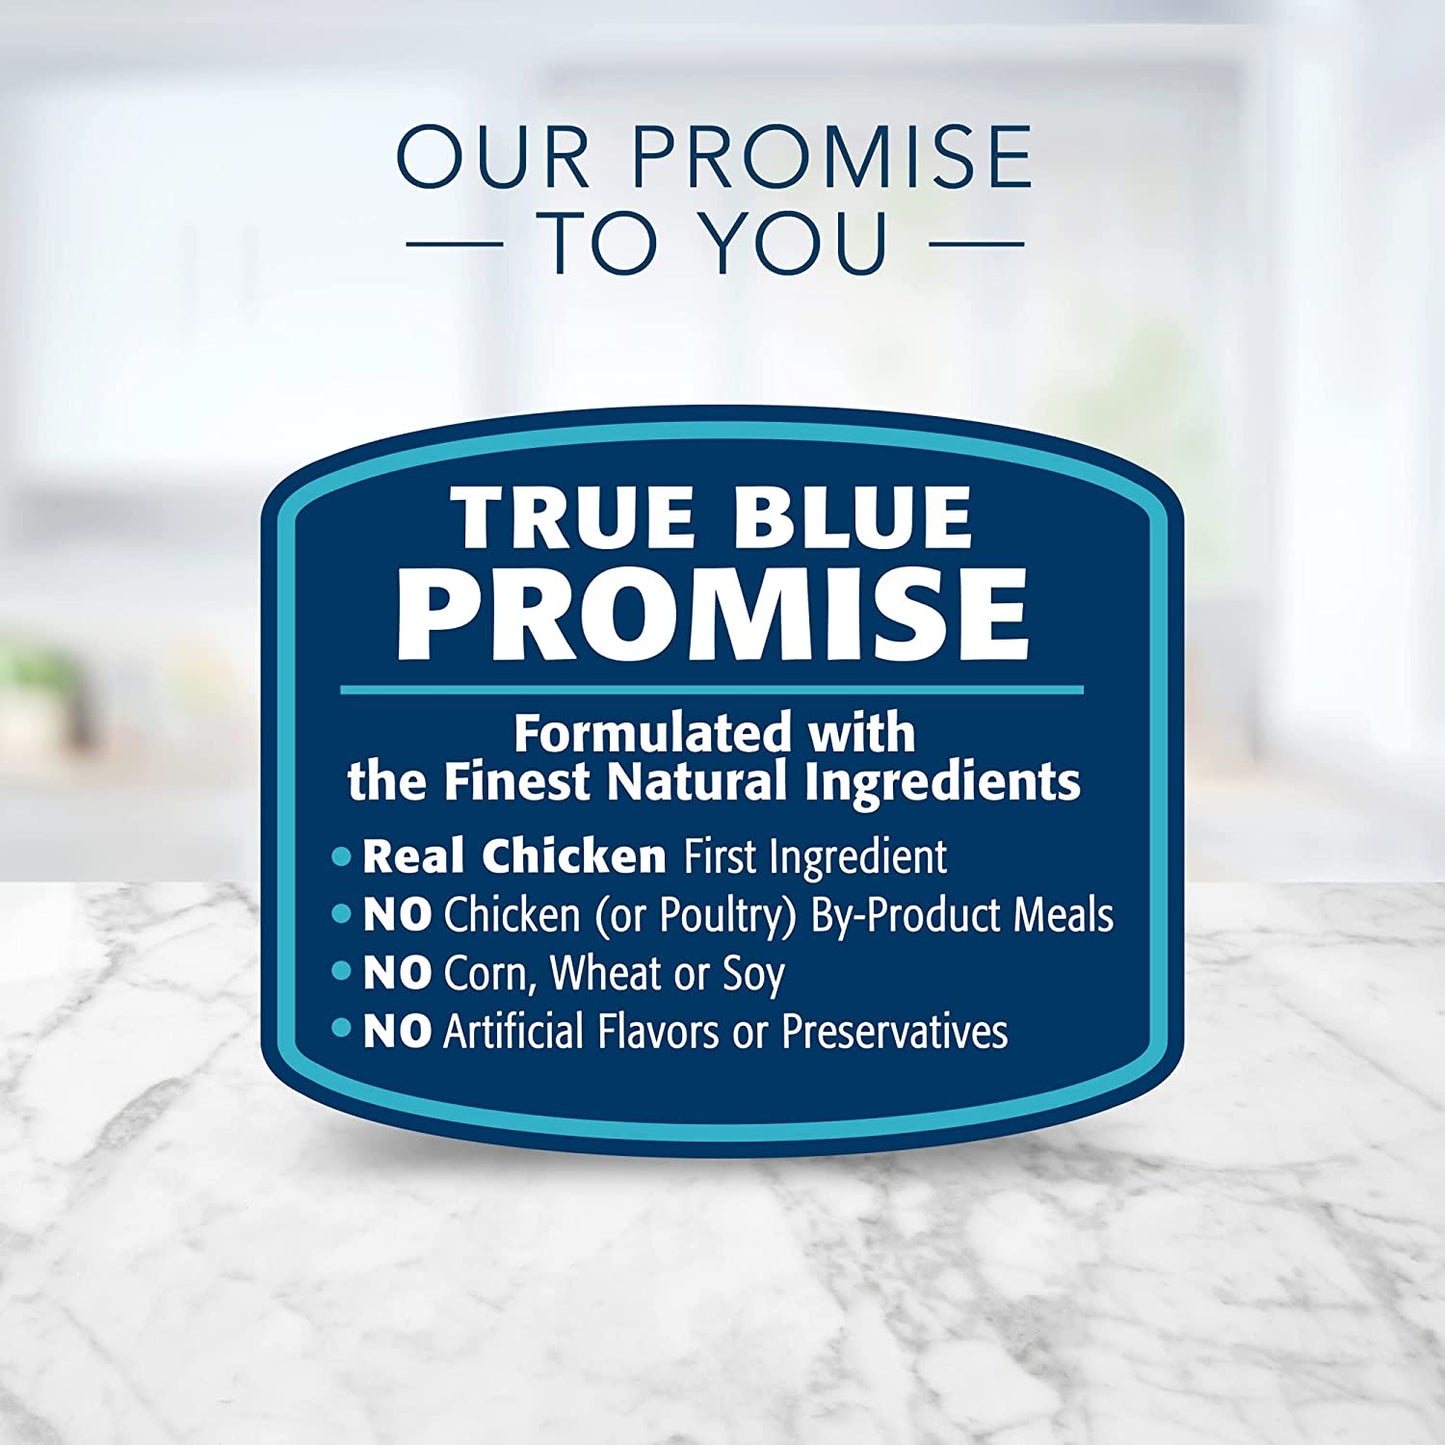 Blue Buffalo Tastefuls Adult 7+ Natural Dry Cat Food, Chicken 7Lb Bag